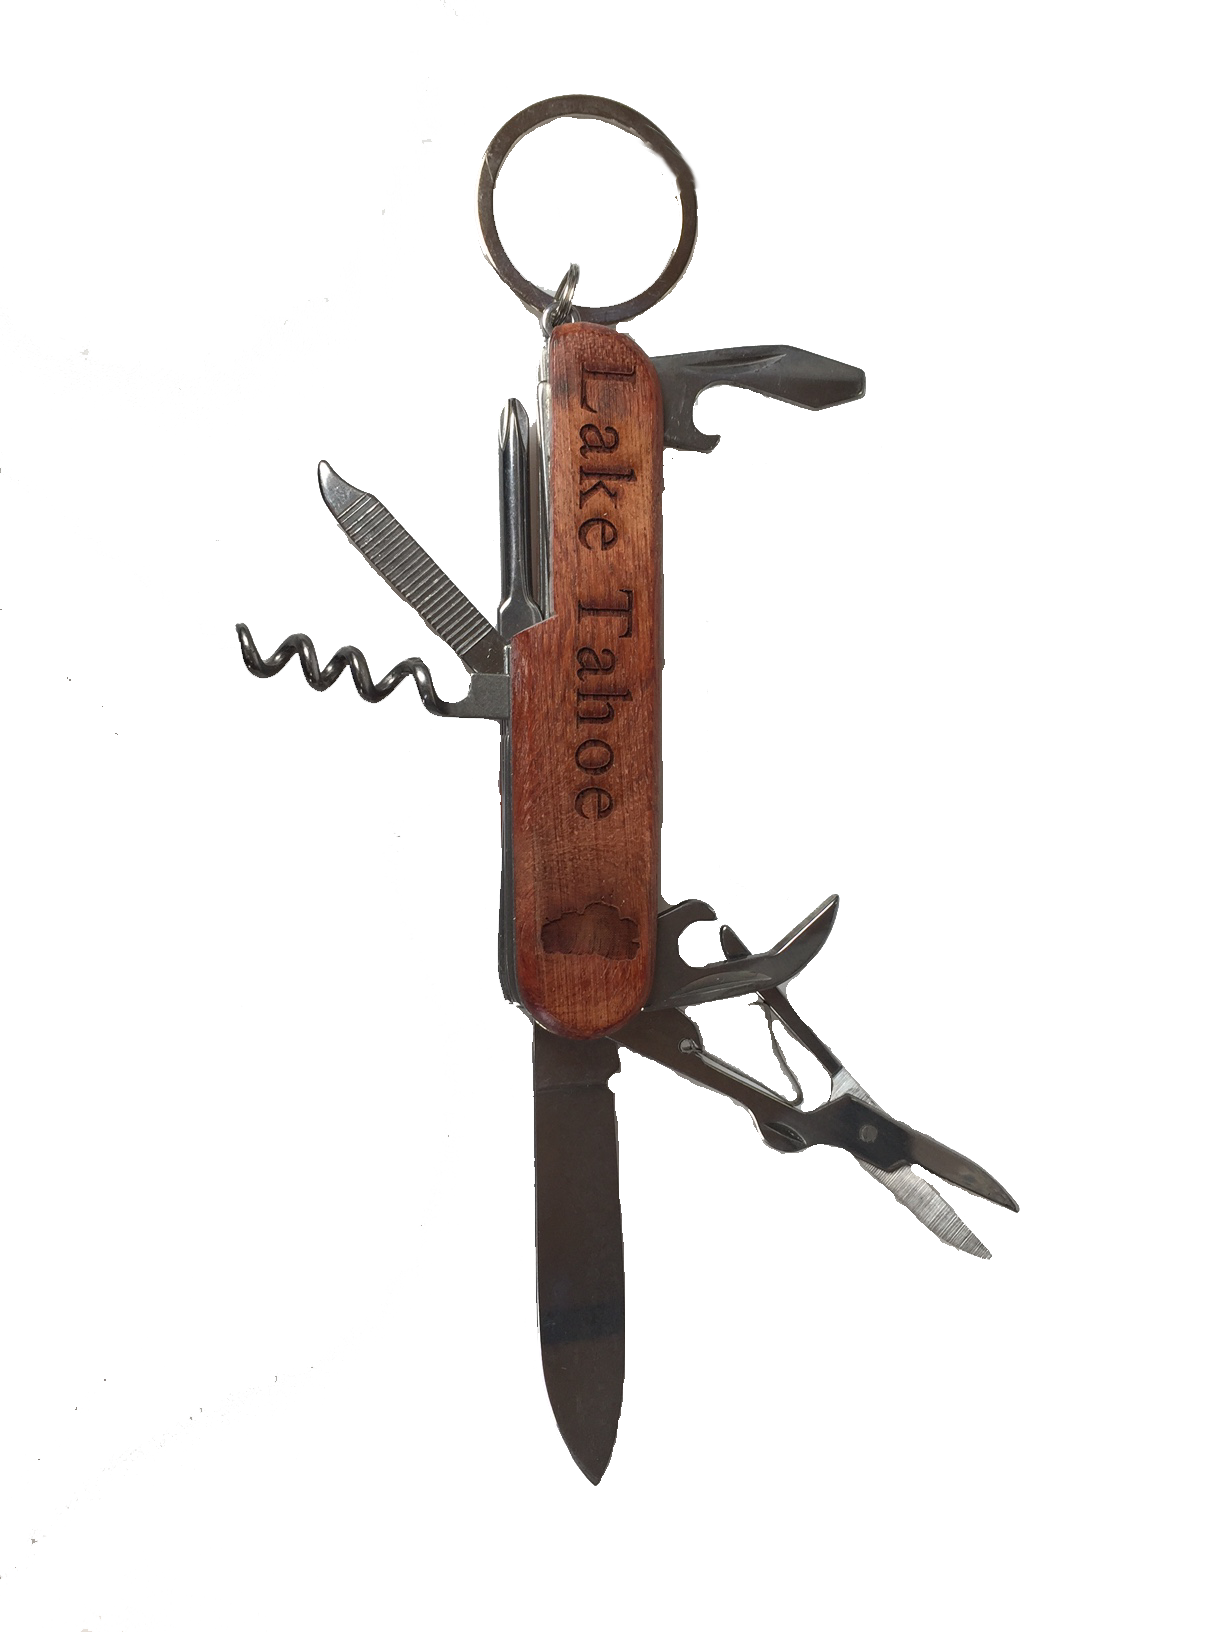 Souvenir Pocket Knife Engraved Wood Lake Tahoe 7 Accessories - Wholesale  Resort Accessories